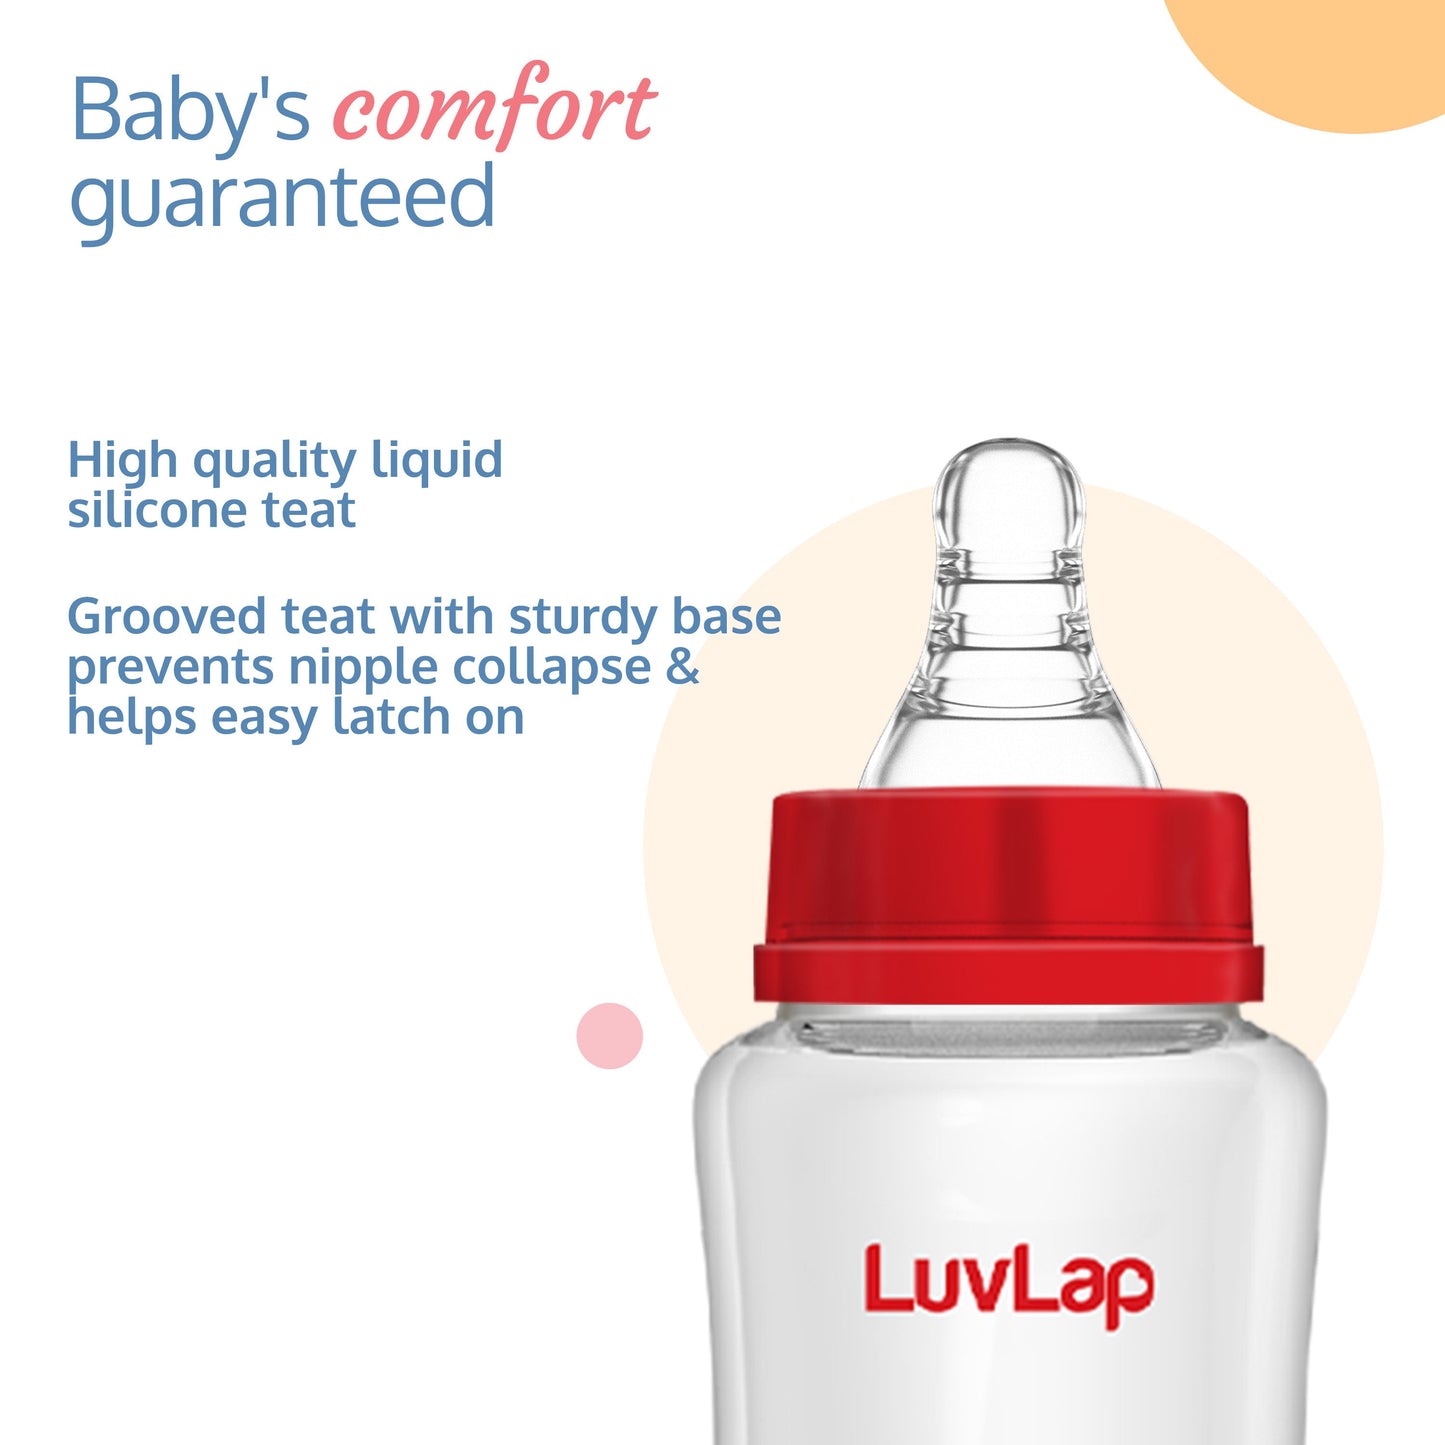 Anti-Colic Slim/Regular Neck Essential Baby Feeding Bottle, 250ml (Pack of 2)